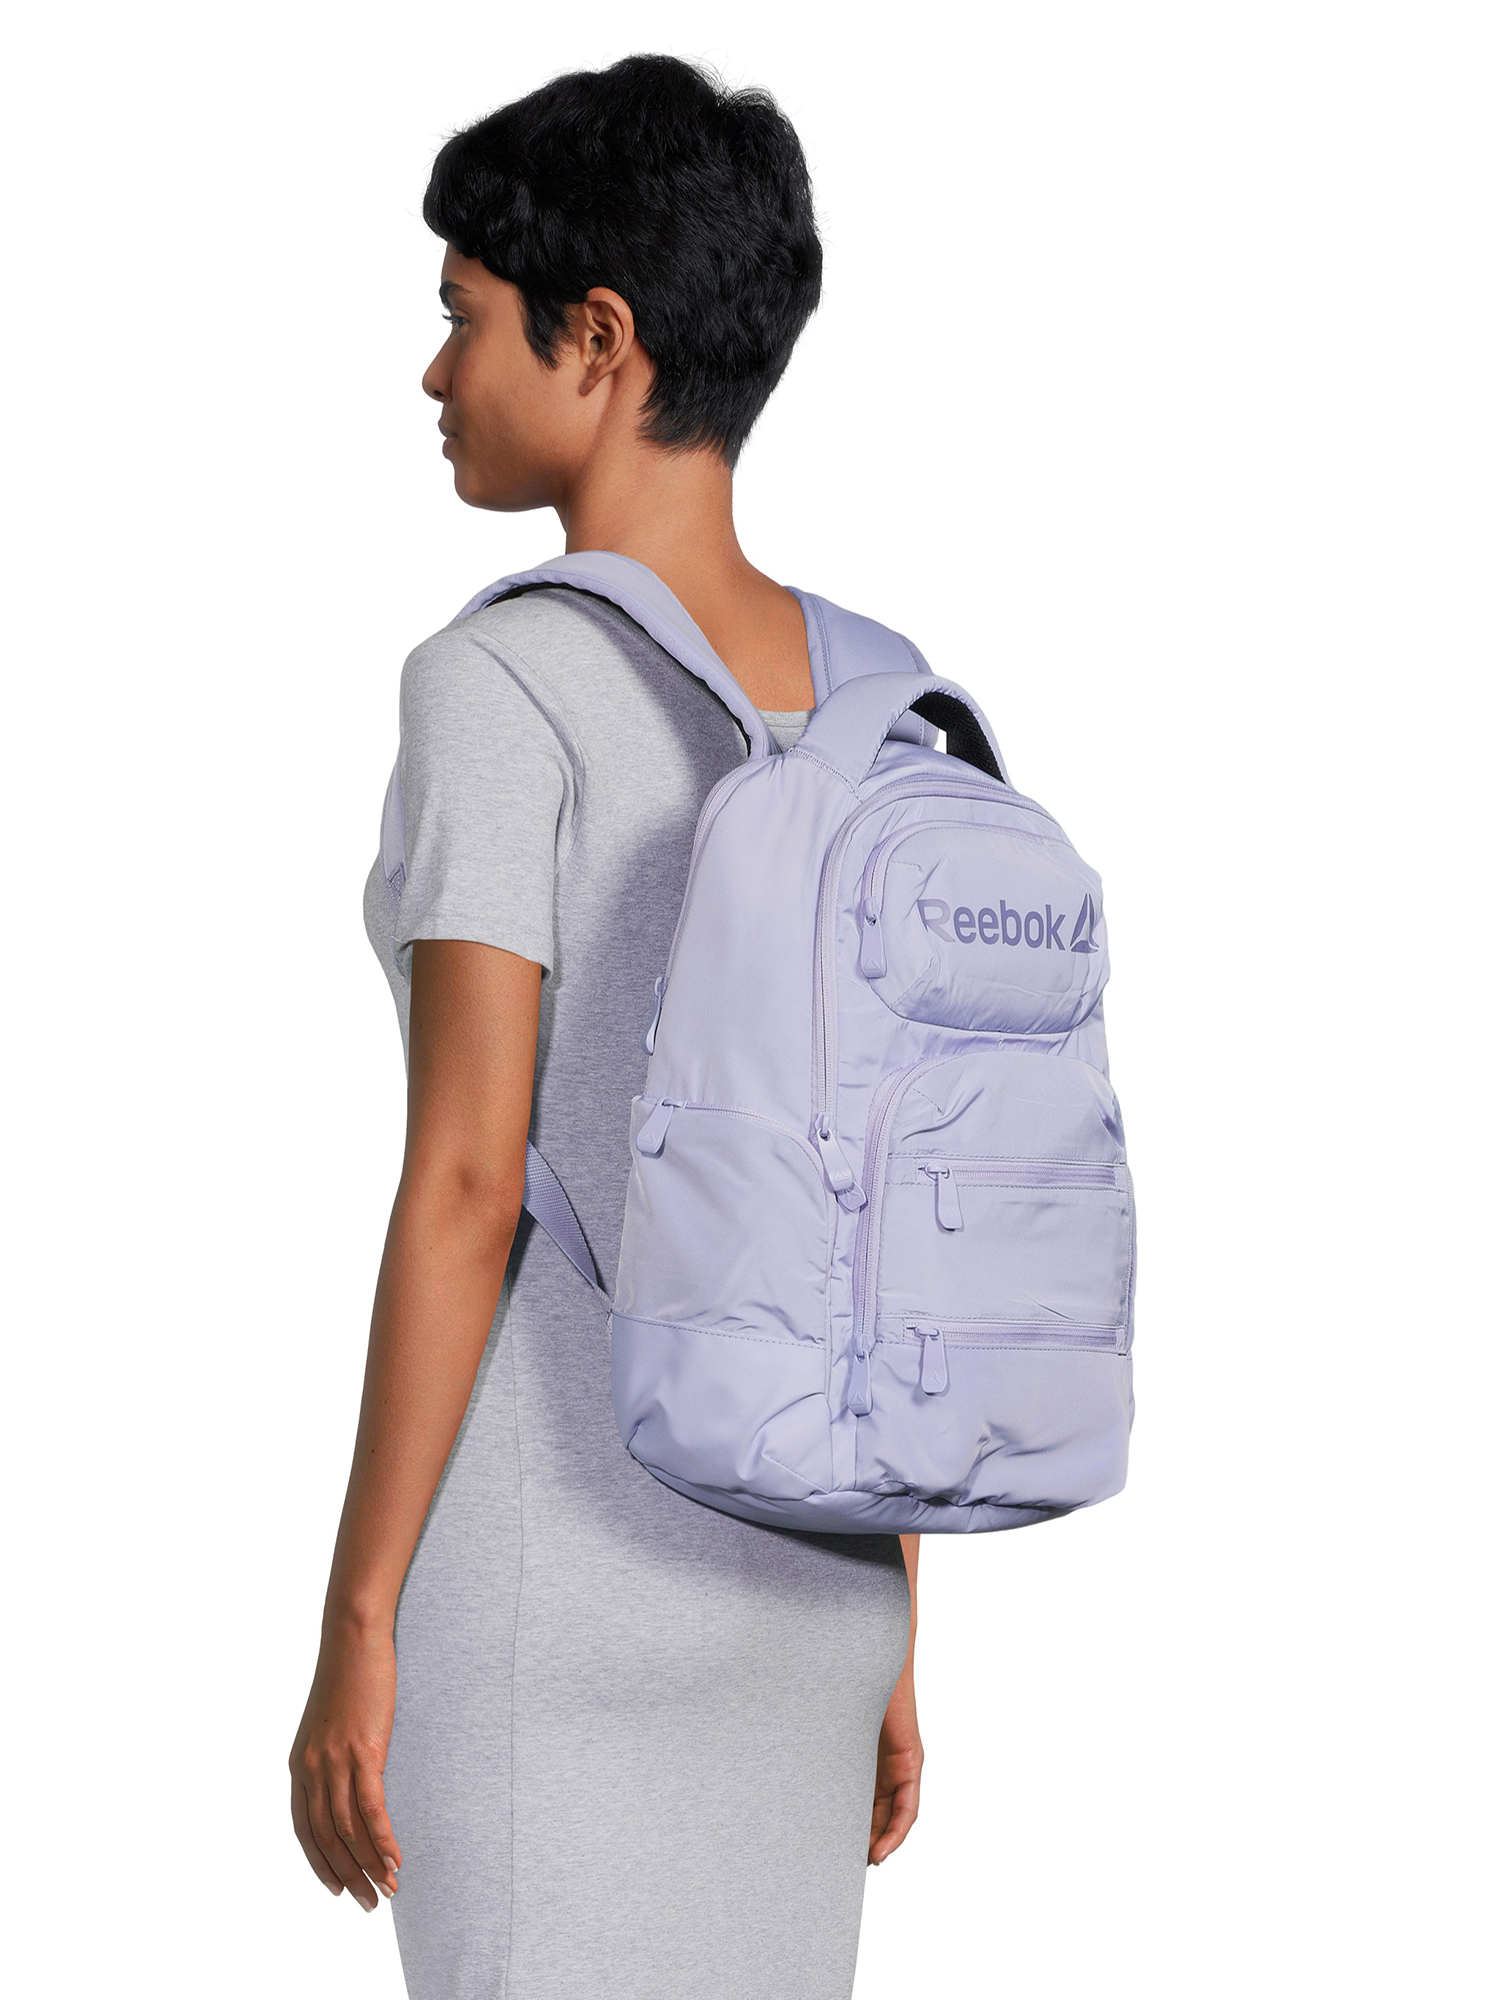 Reebok Unisex Adult Winter 16" Laptop Backpack, Sweet Lavender - image 2 of 5